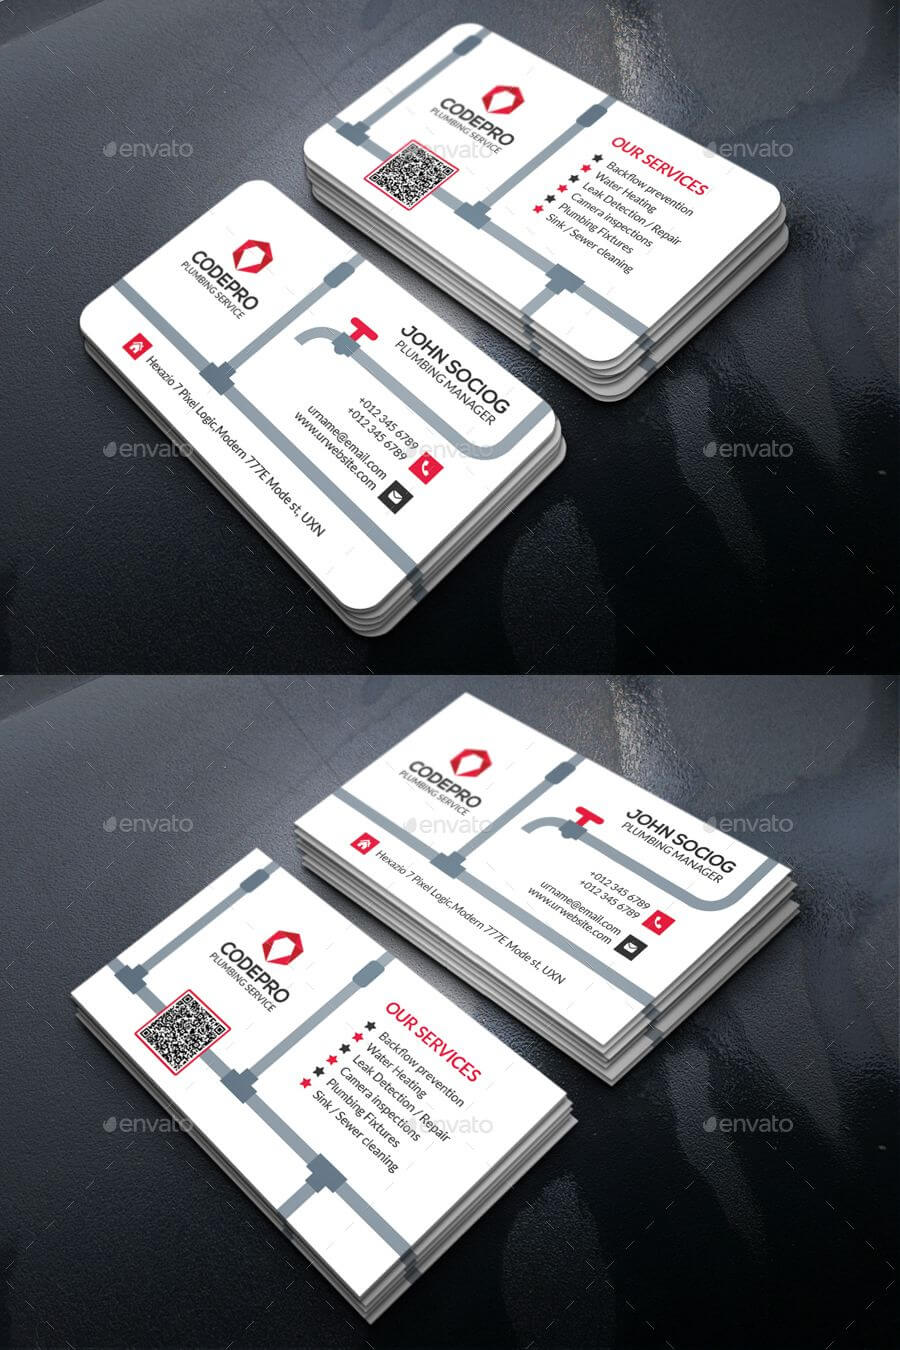 Plumbing Business Card Template Psd | Make Business Cards Inside Business Card Maker Template